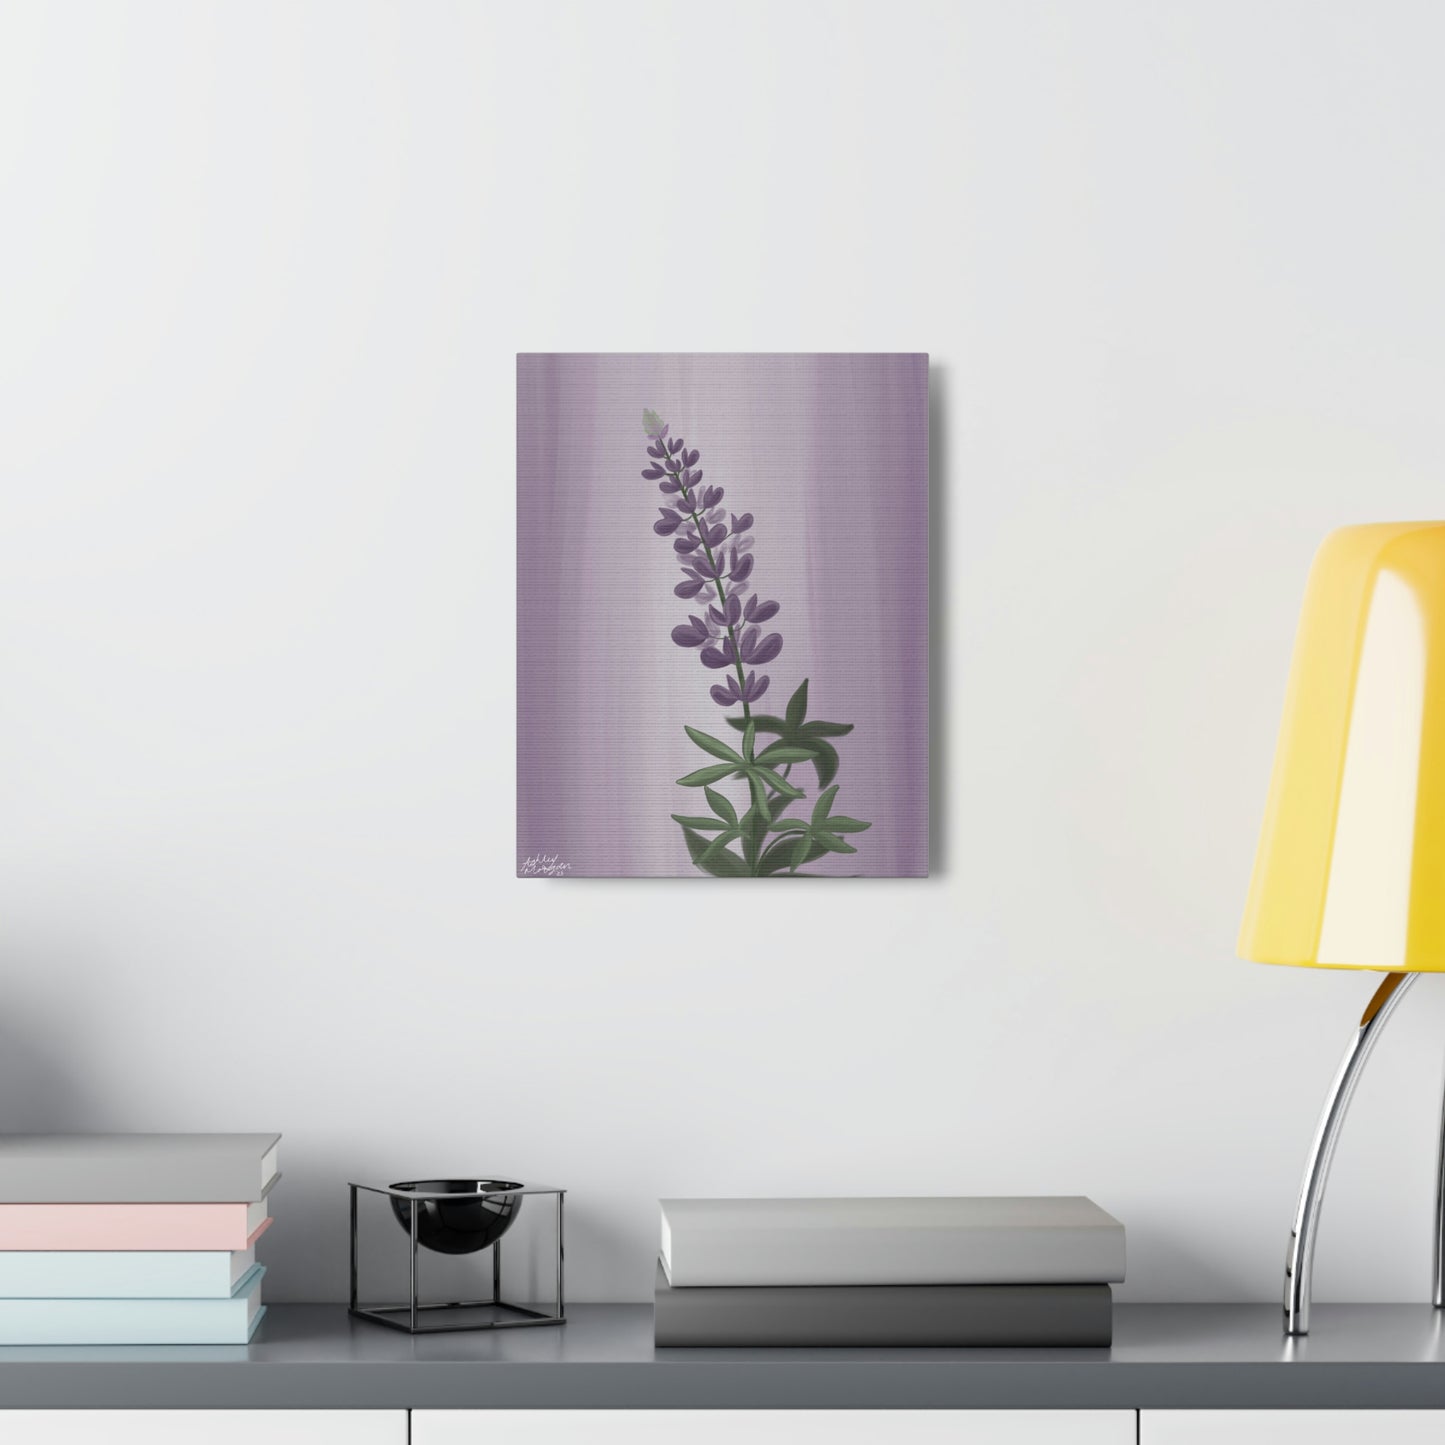 Lupine Wildflower Canvas Wrap